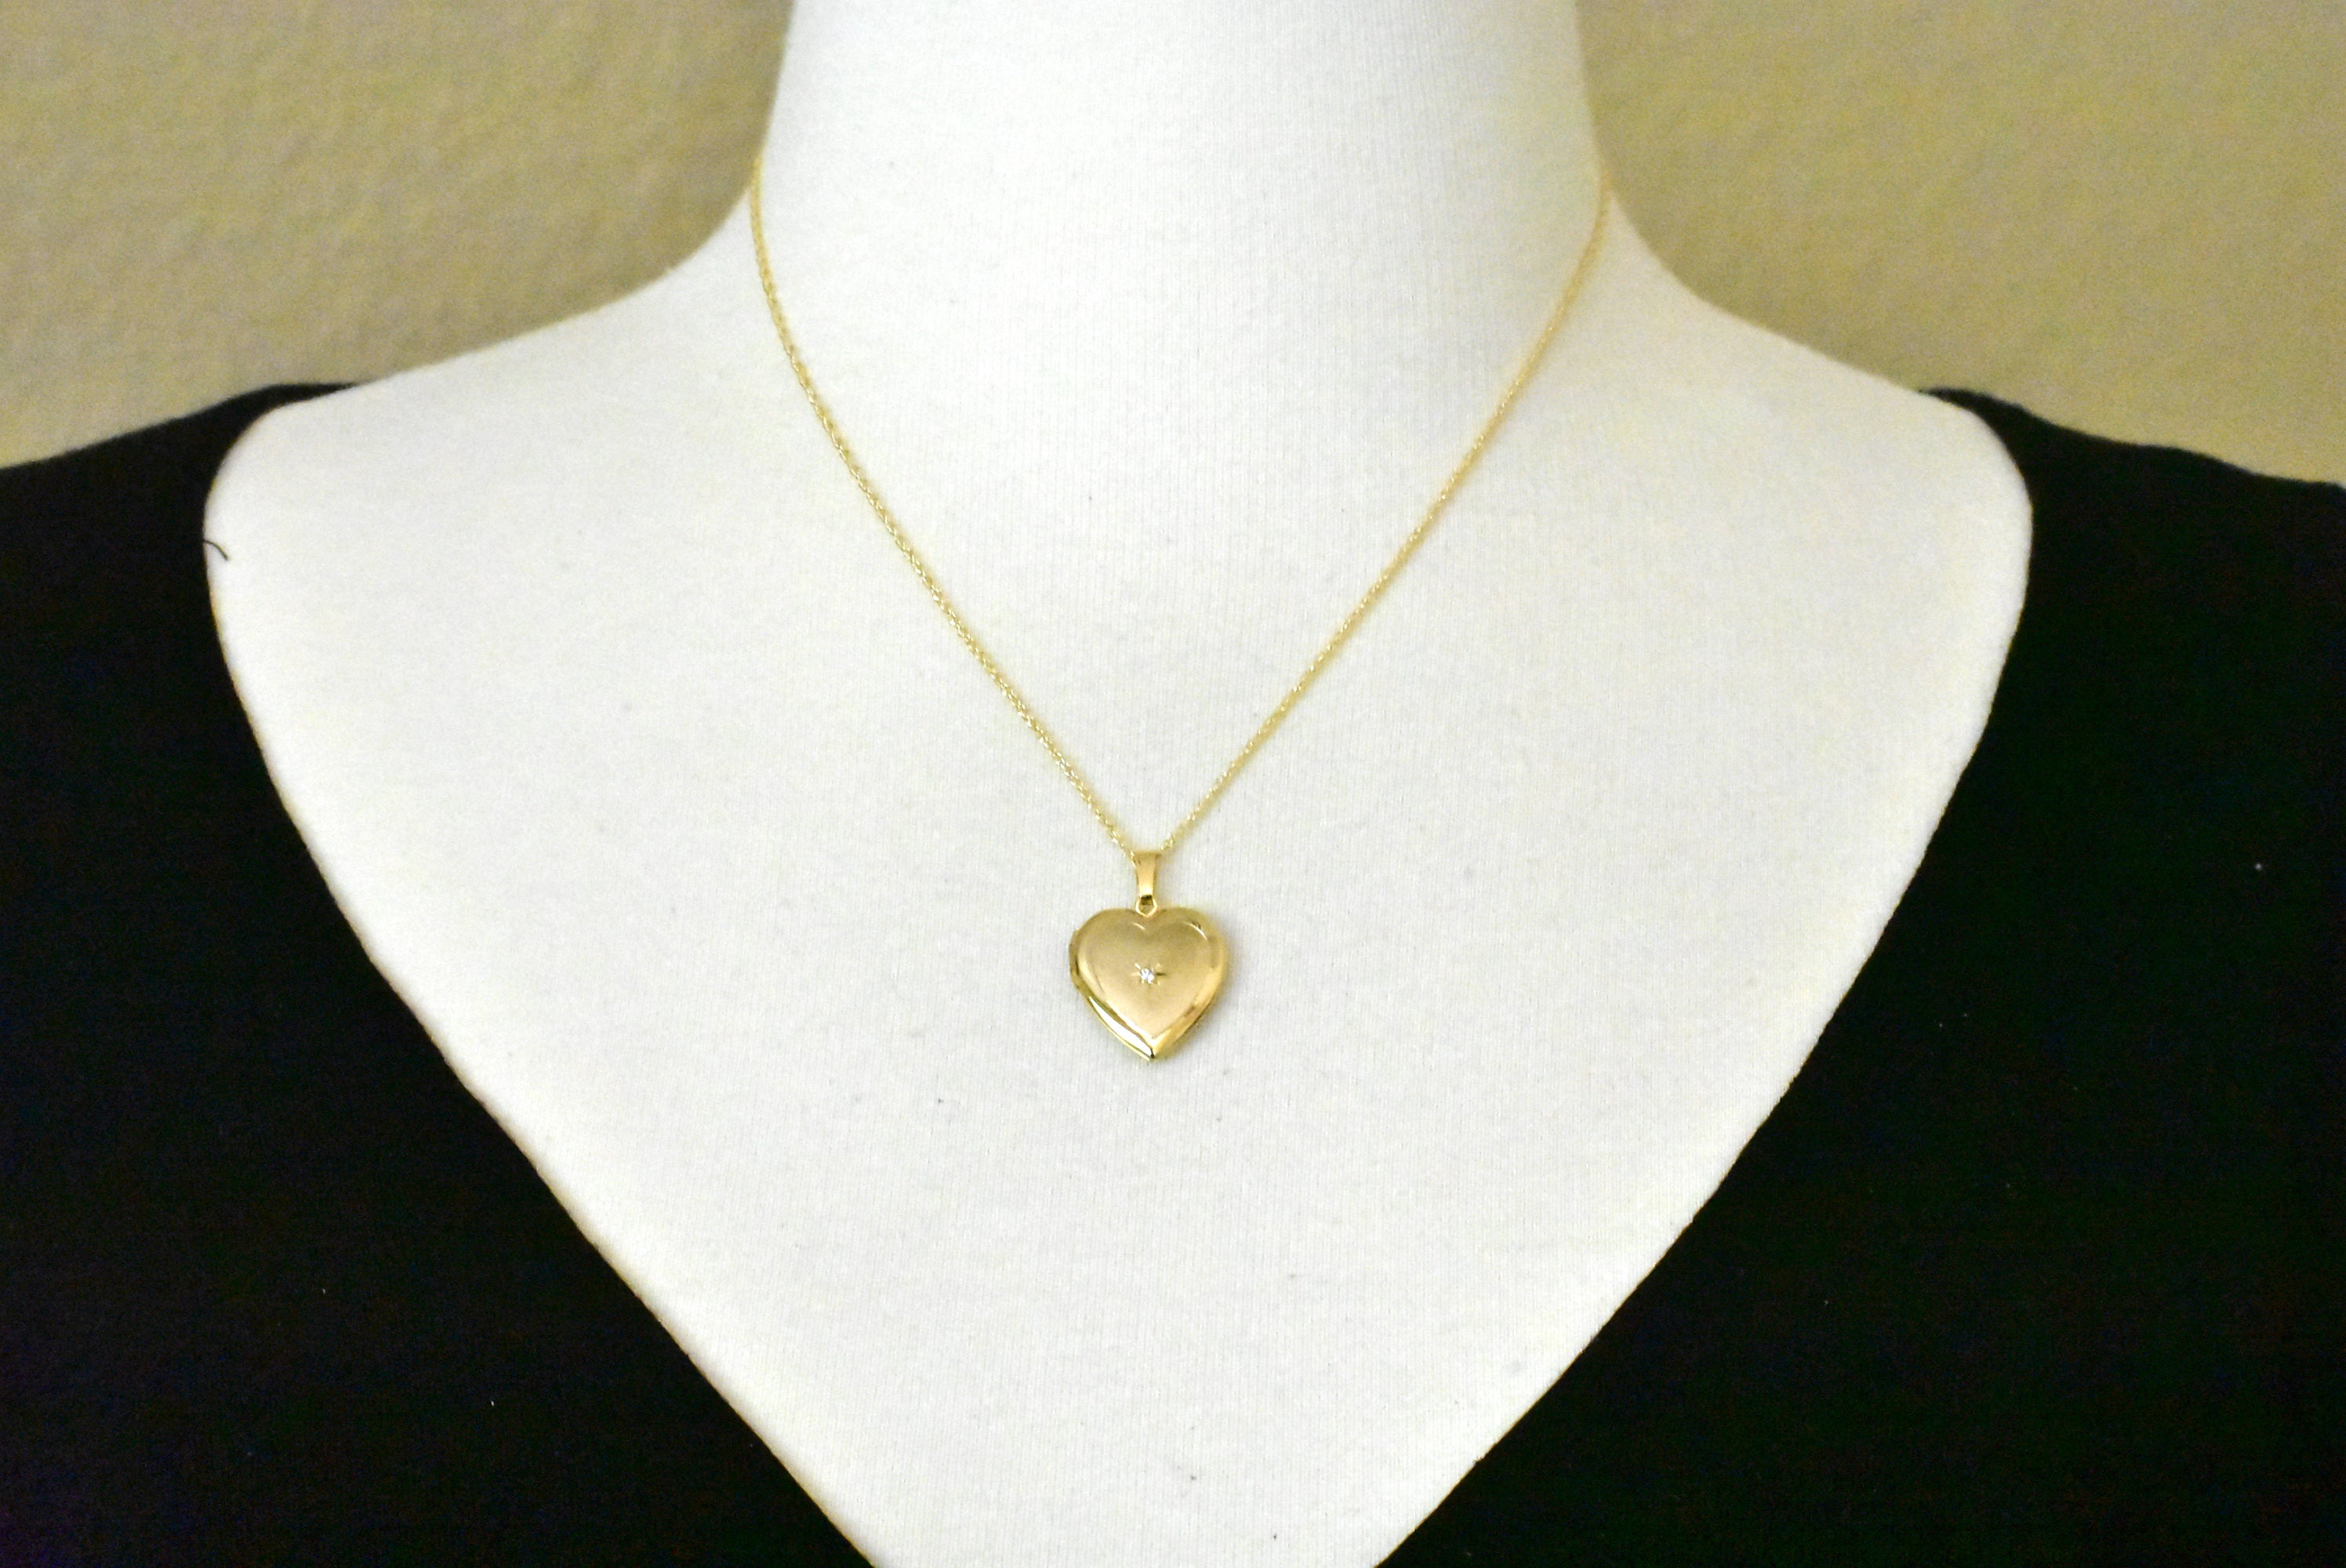 14K Solid Yellow Gold 19mm Heart .02 CTW Diamond Locket Pendant Charm Engraved Personalized Monogram